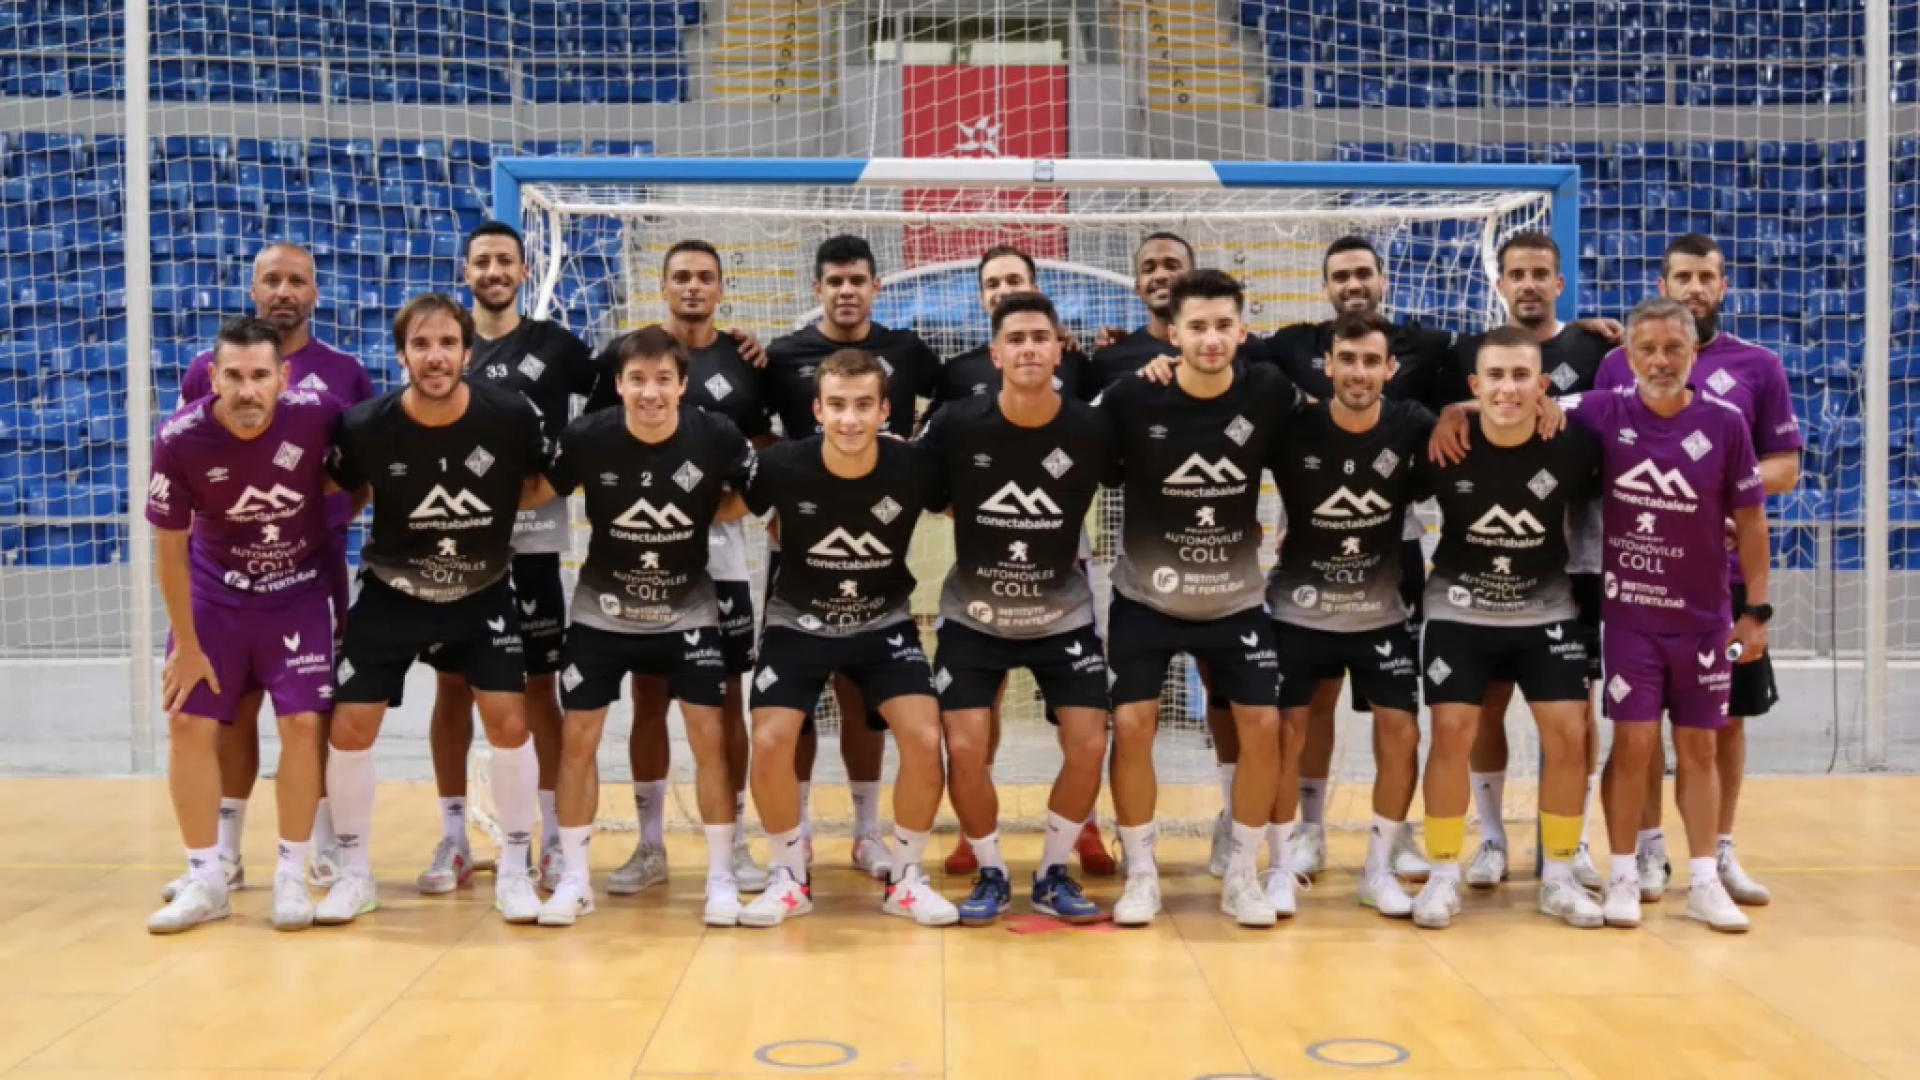 El Palma Futsal ja trepitja Son Moix